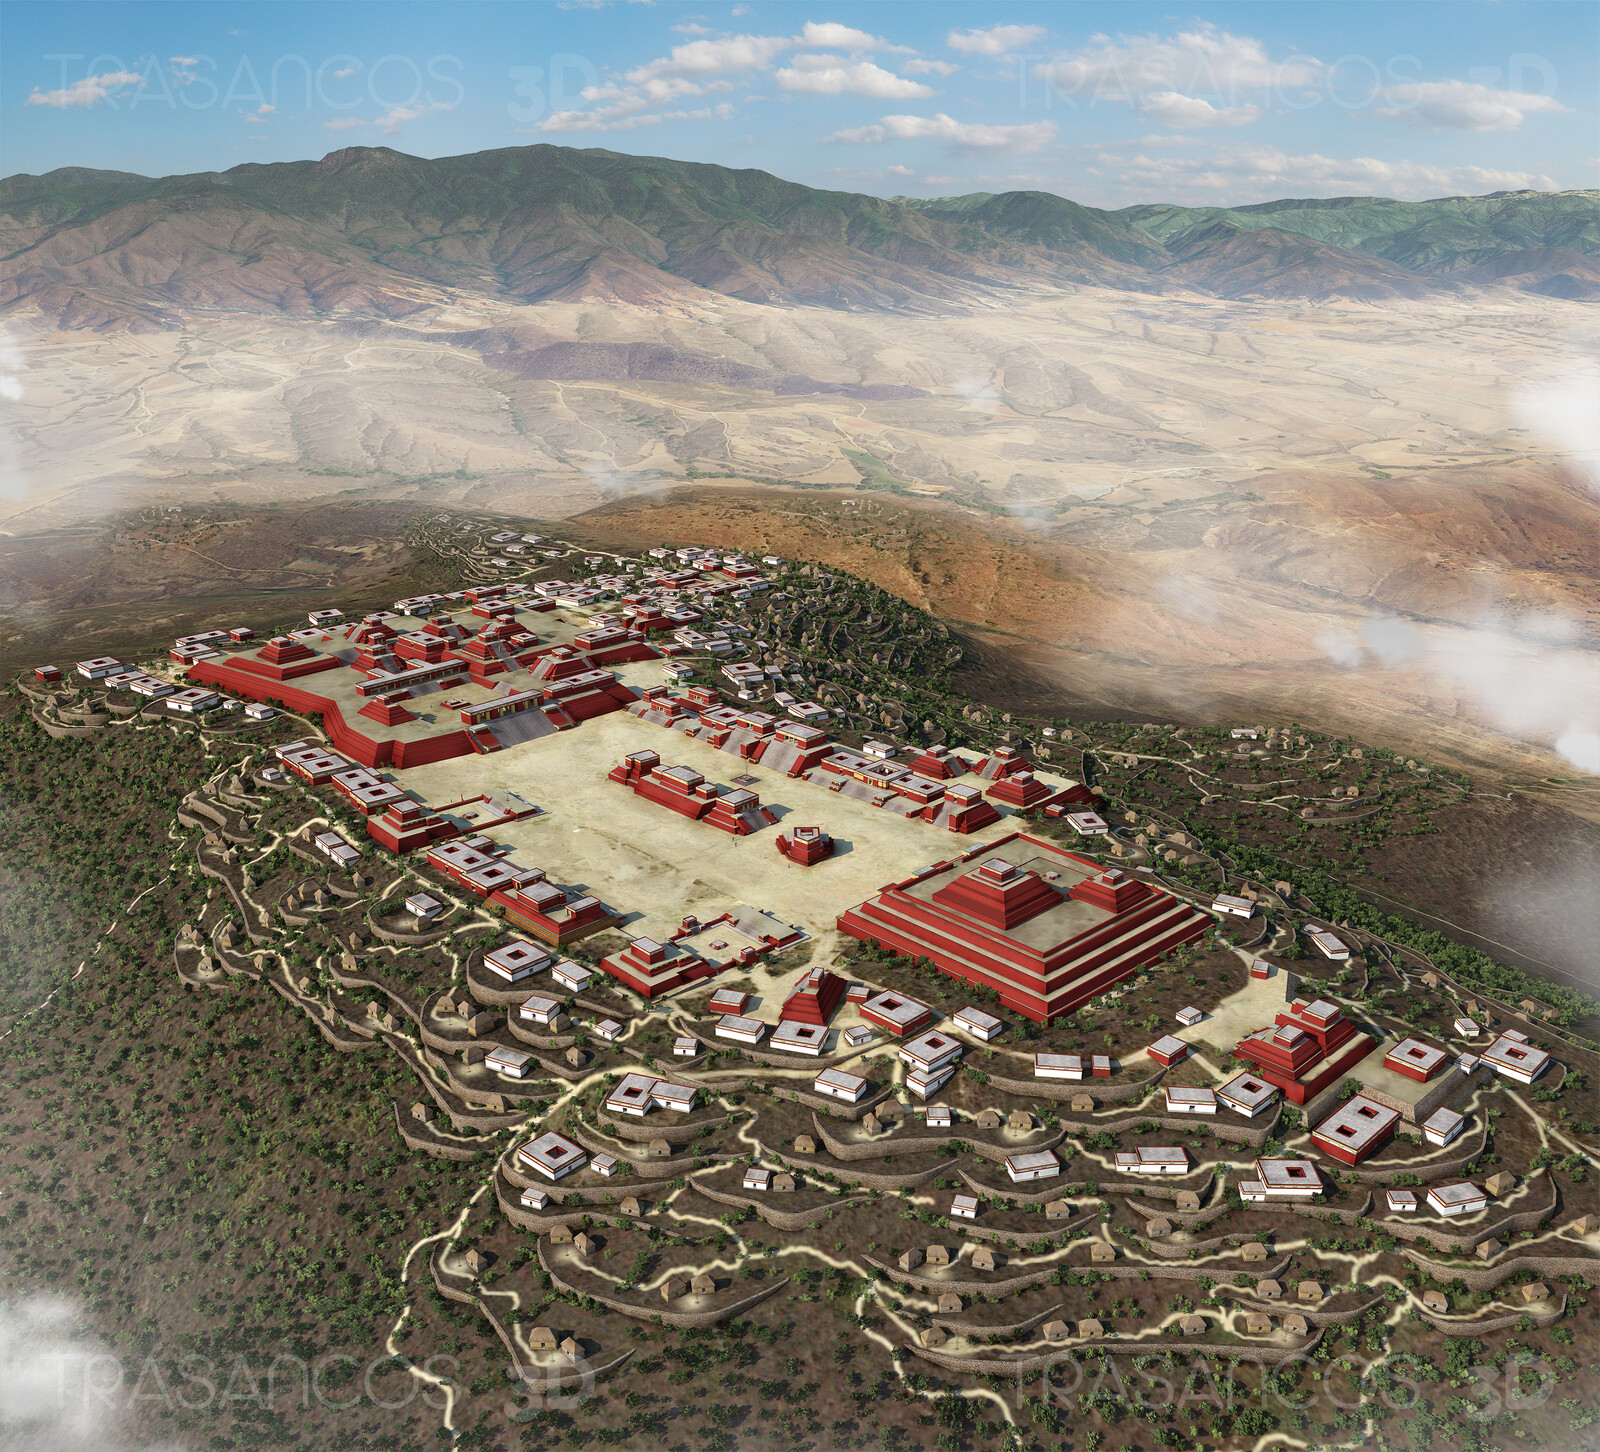 Aerial view of the zapotec city of Monte Albán.
Modeled in collaboration with:
- Andrés Armesto
- Alejandro Soriano
- Carlos Paz
- Diego Blanco